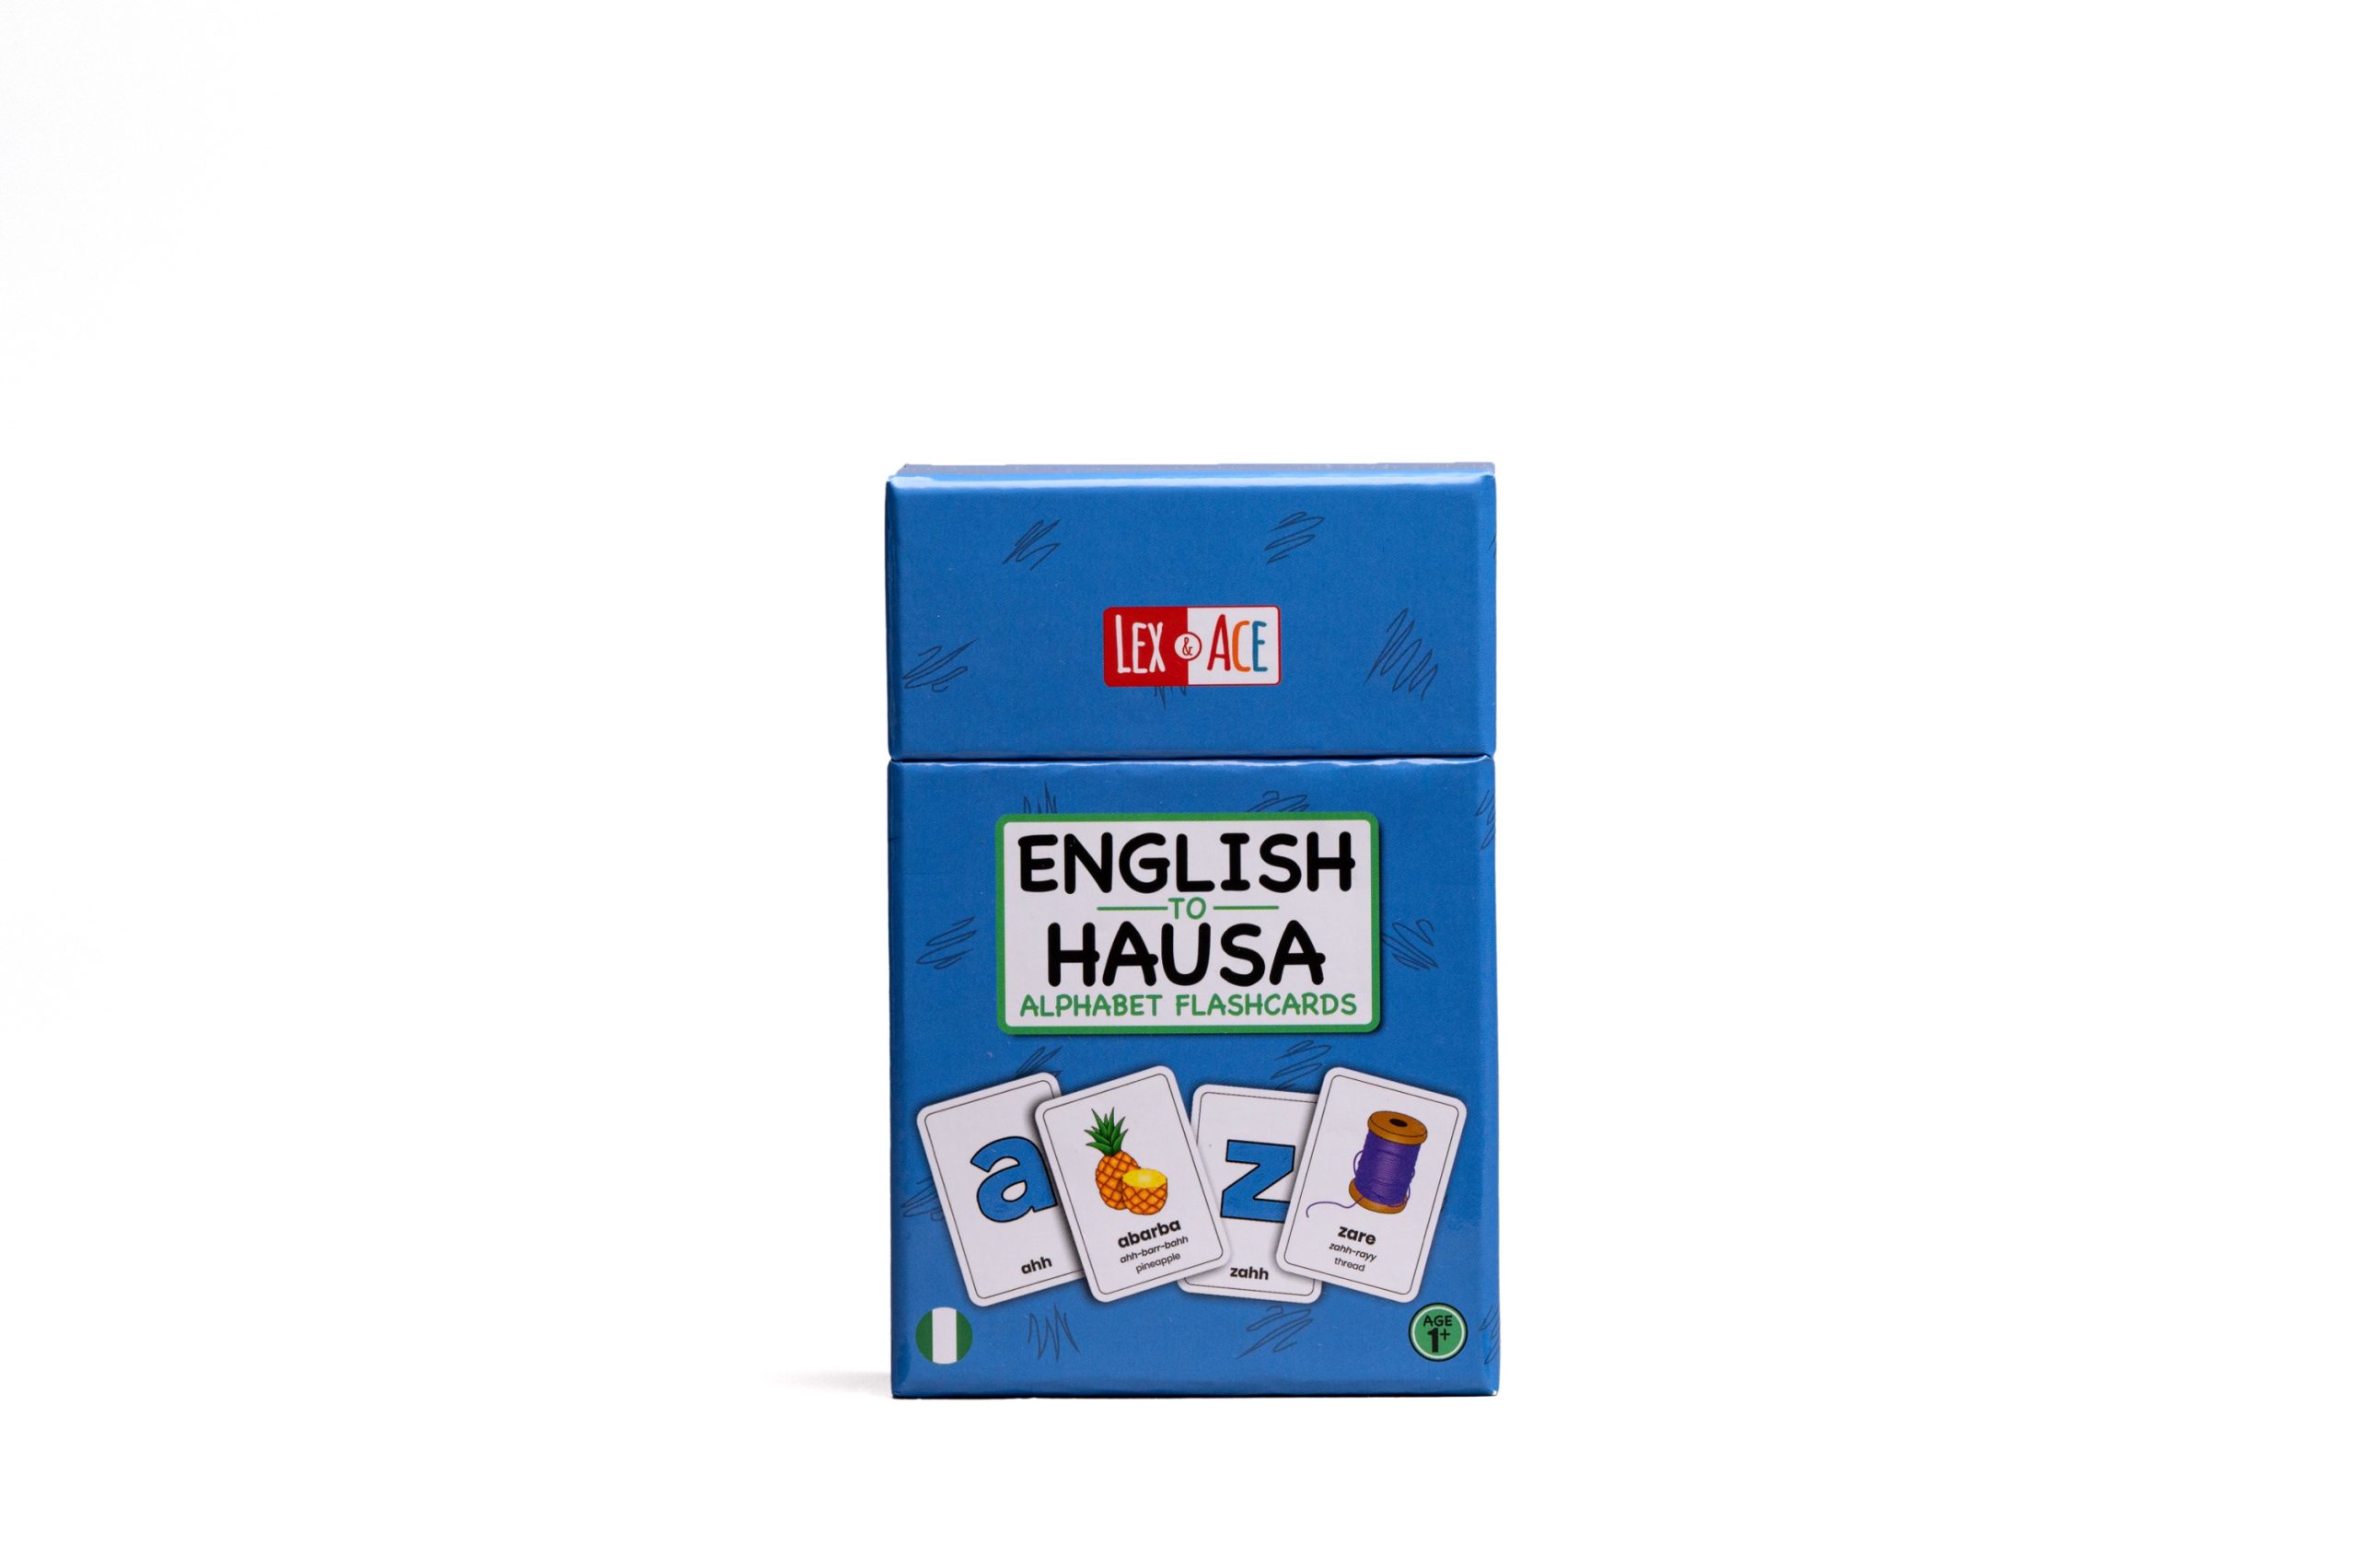 English to Hausa Alphabet Flashcards